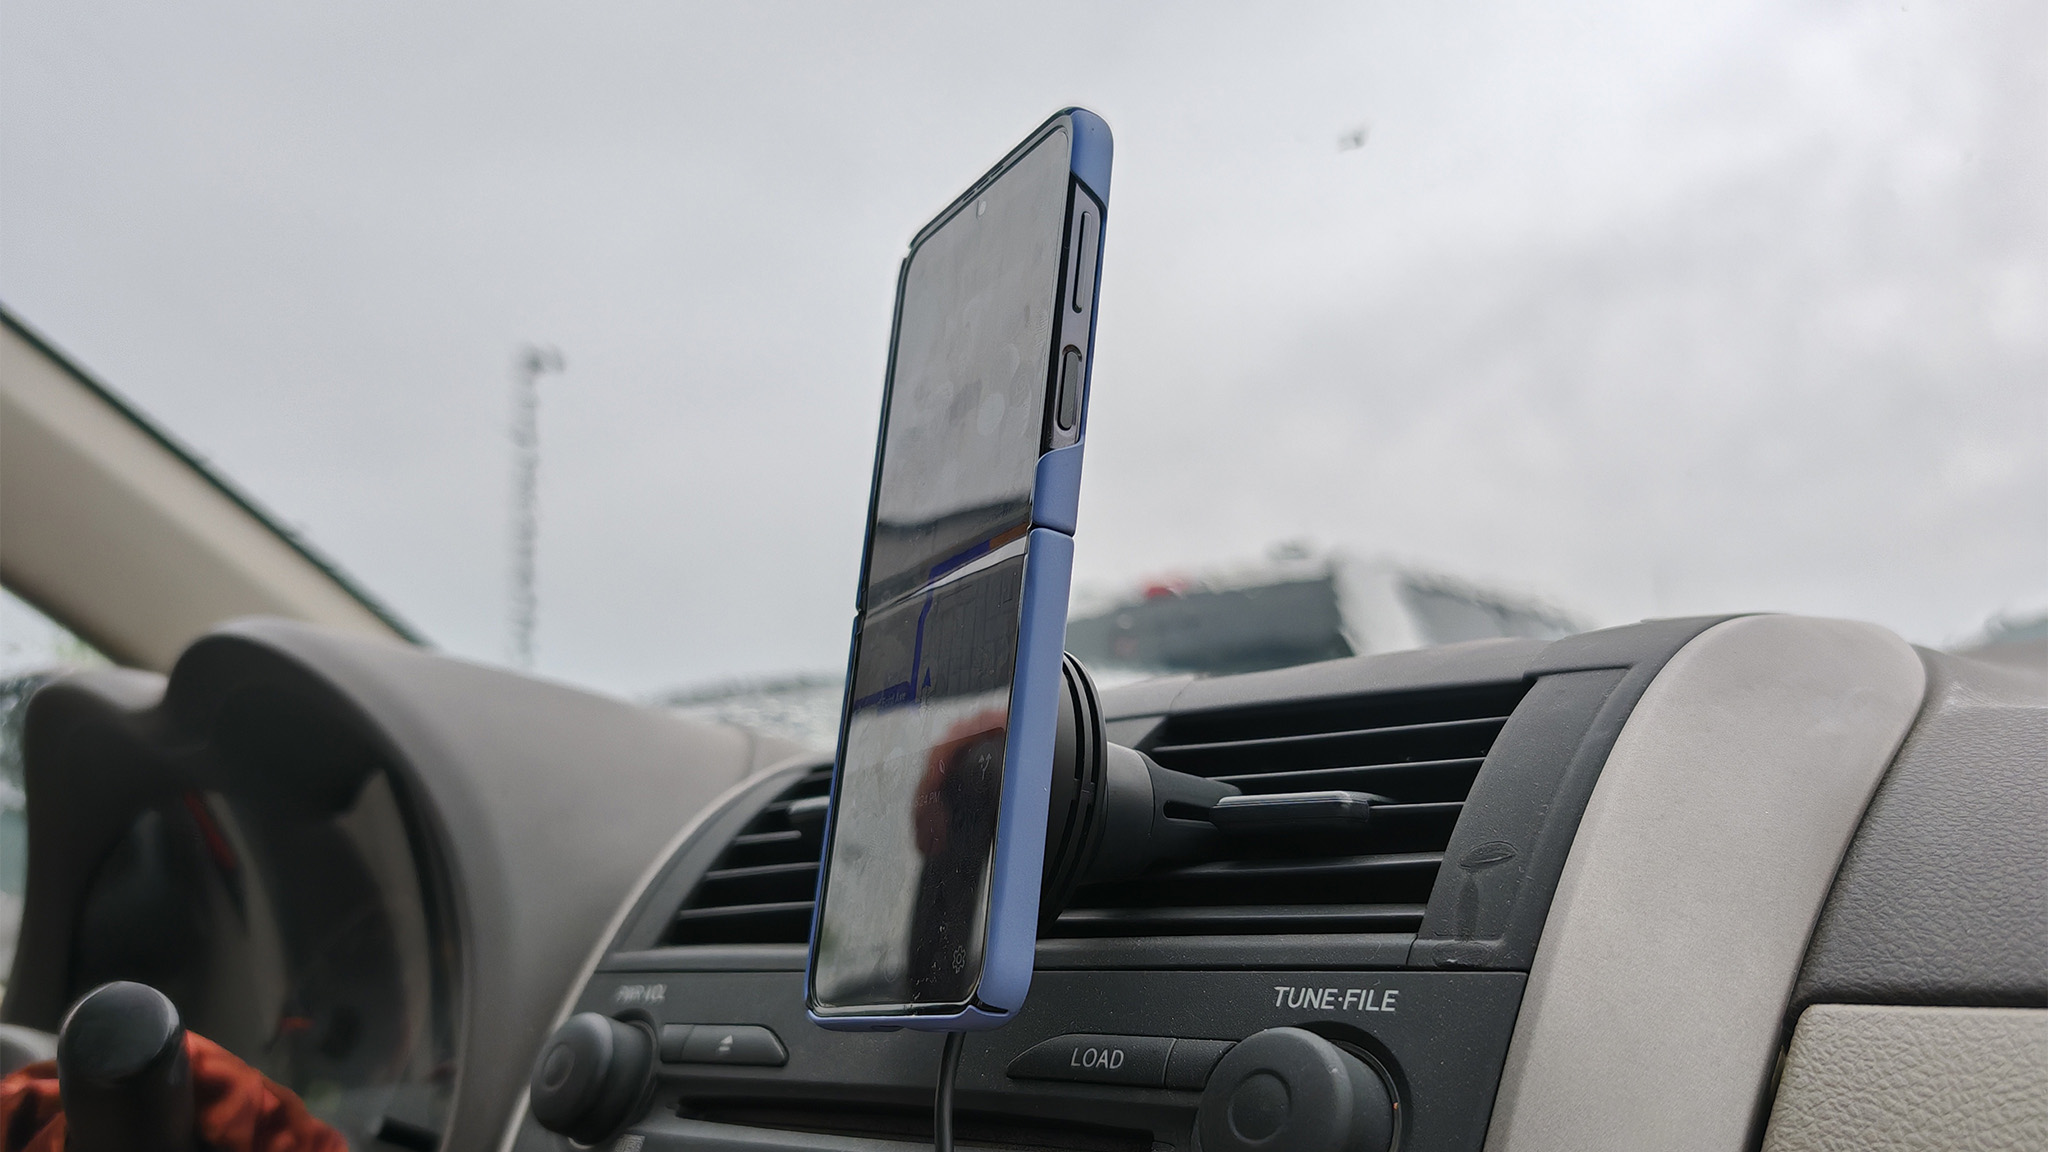 iOttie Velox Mini Qi2 Air Vent Mount with Galaxy Z Flip 4 mounted